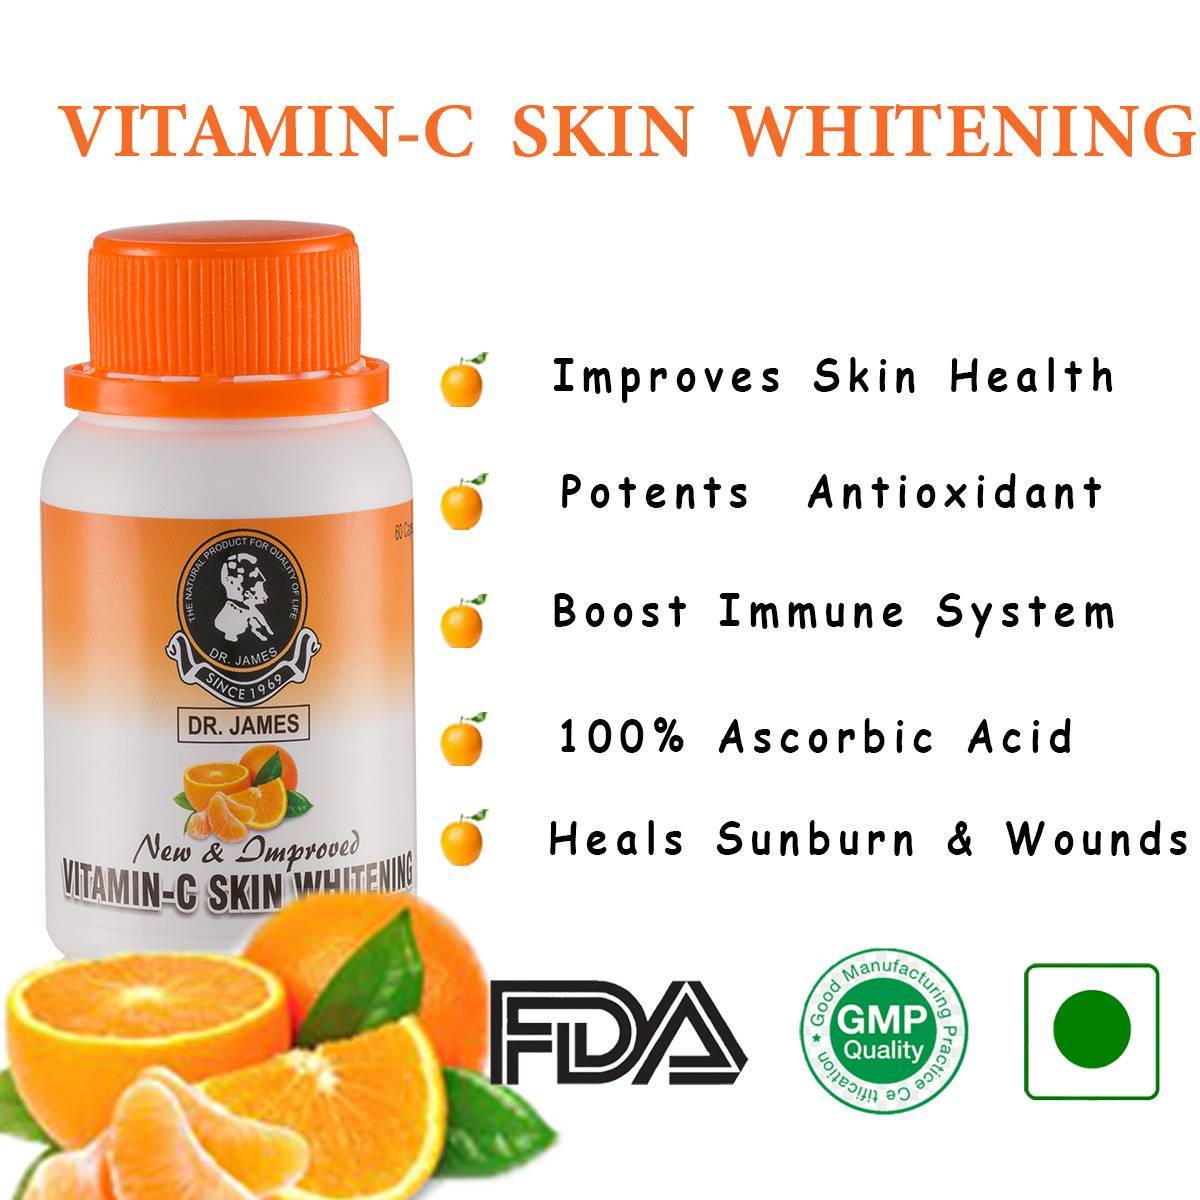 Dr James Vitamin C Skin Whitening Capsules reviews